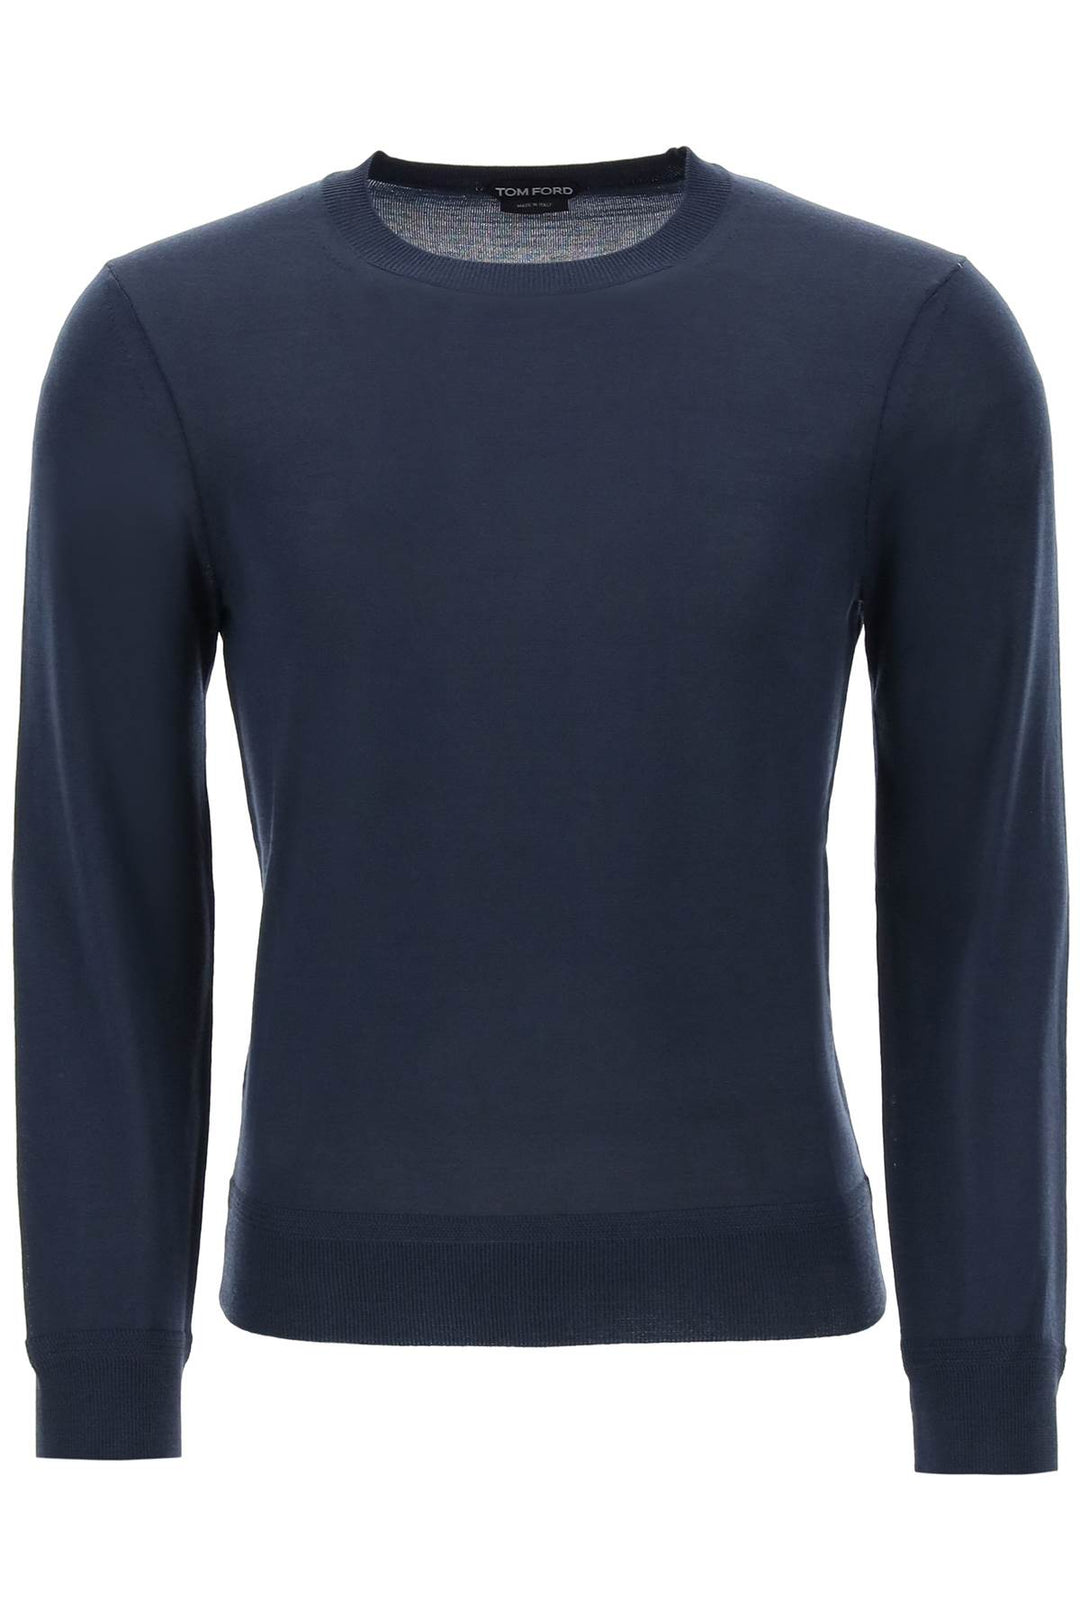 Tom Ford Fine Wool Sweater   Blu